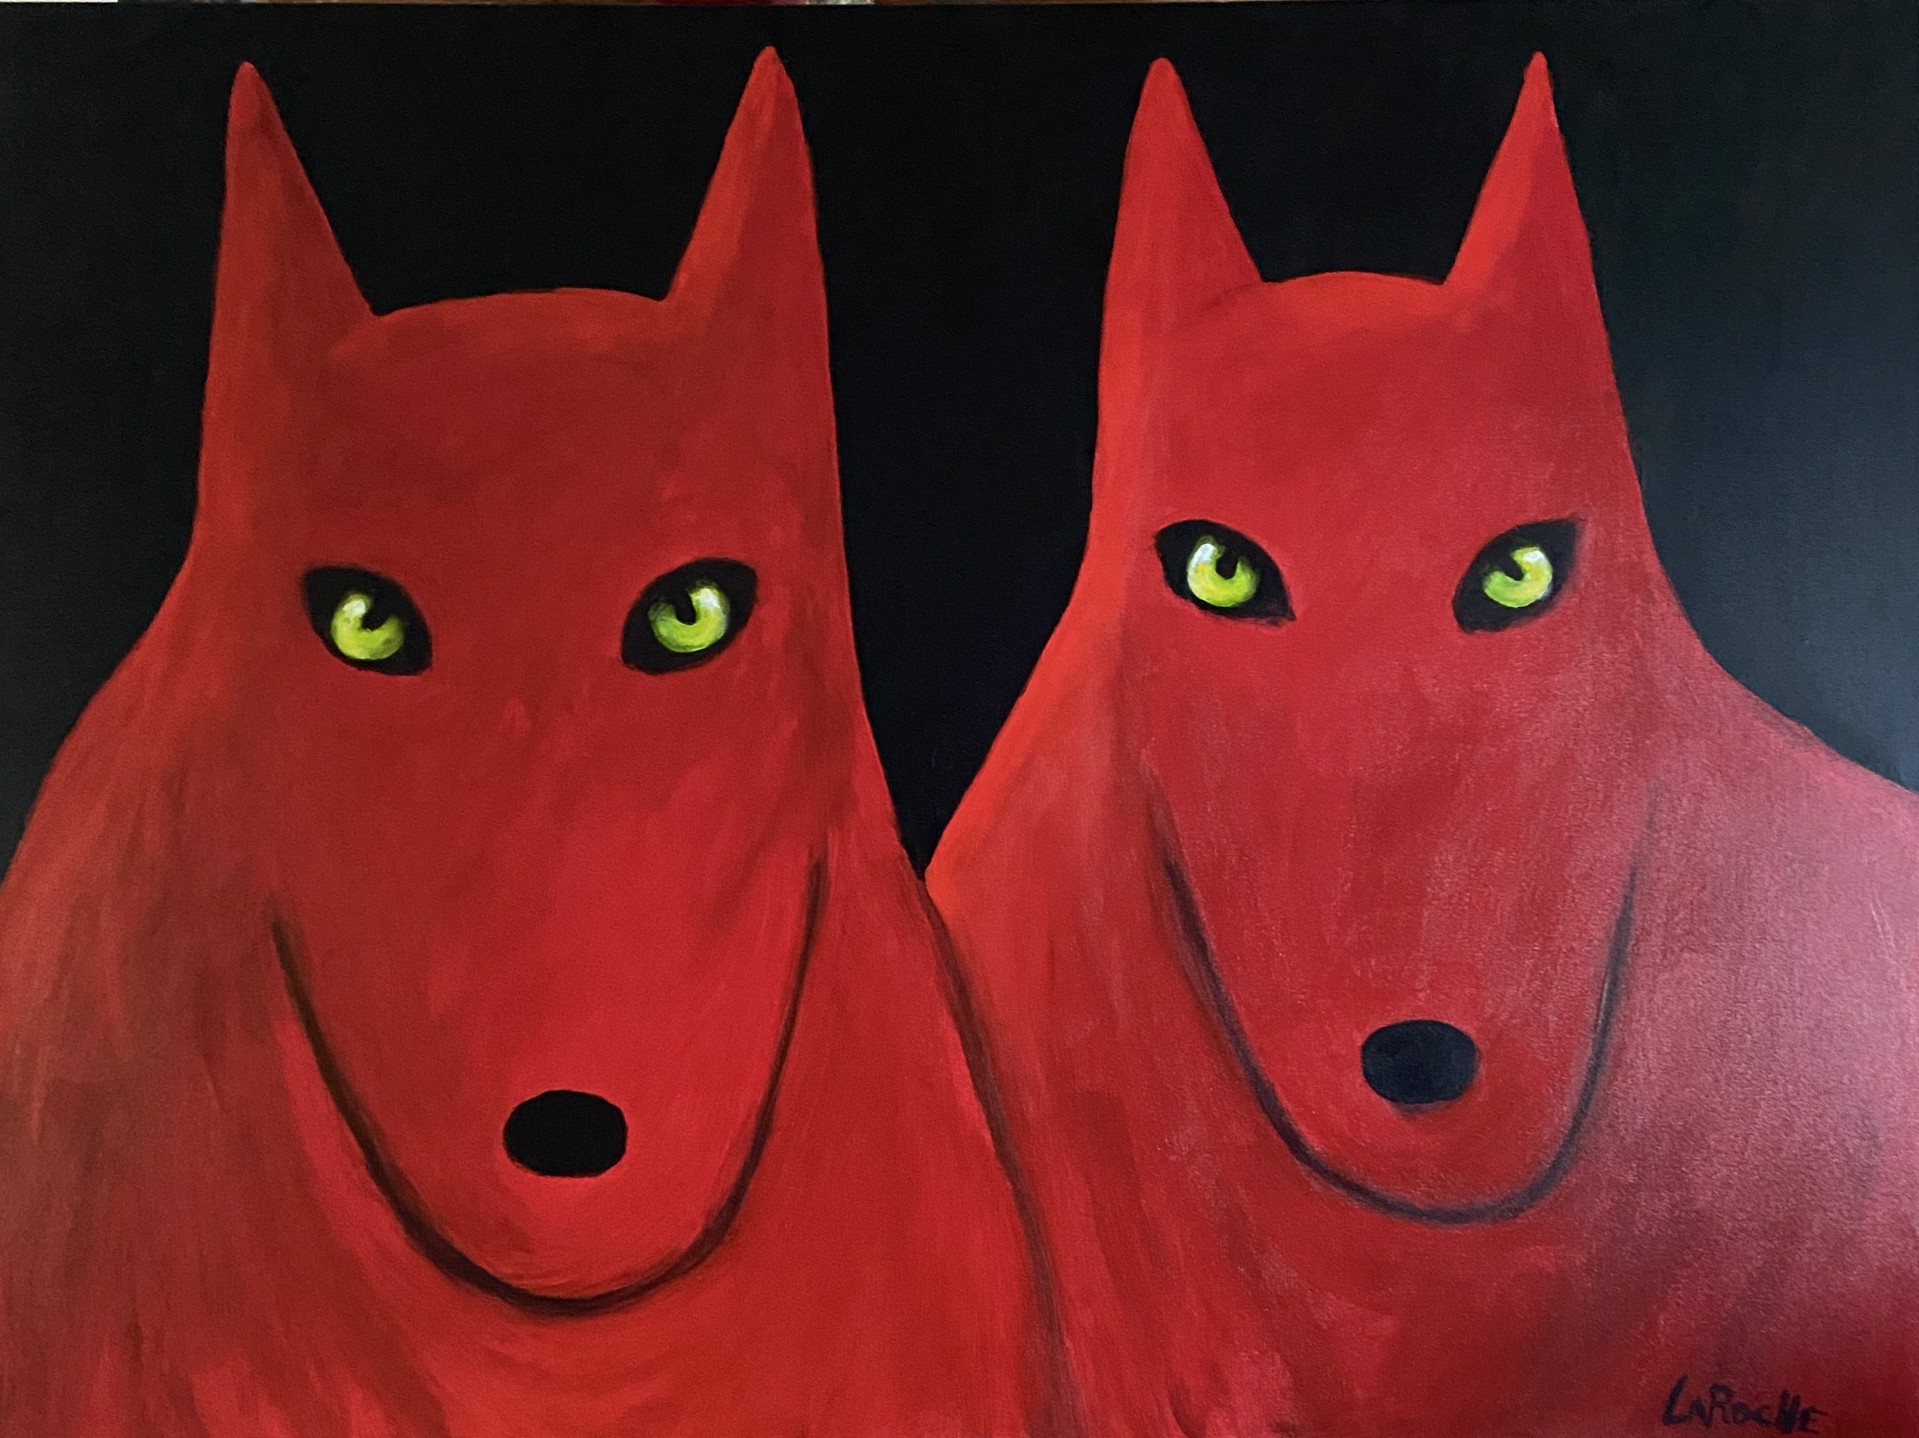 Soulmates: Lobos Rojos by Carole LaRoche